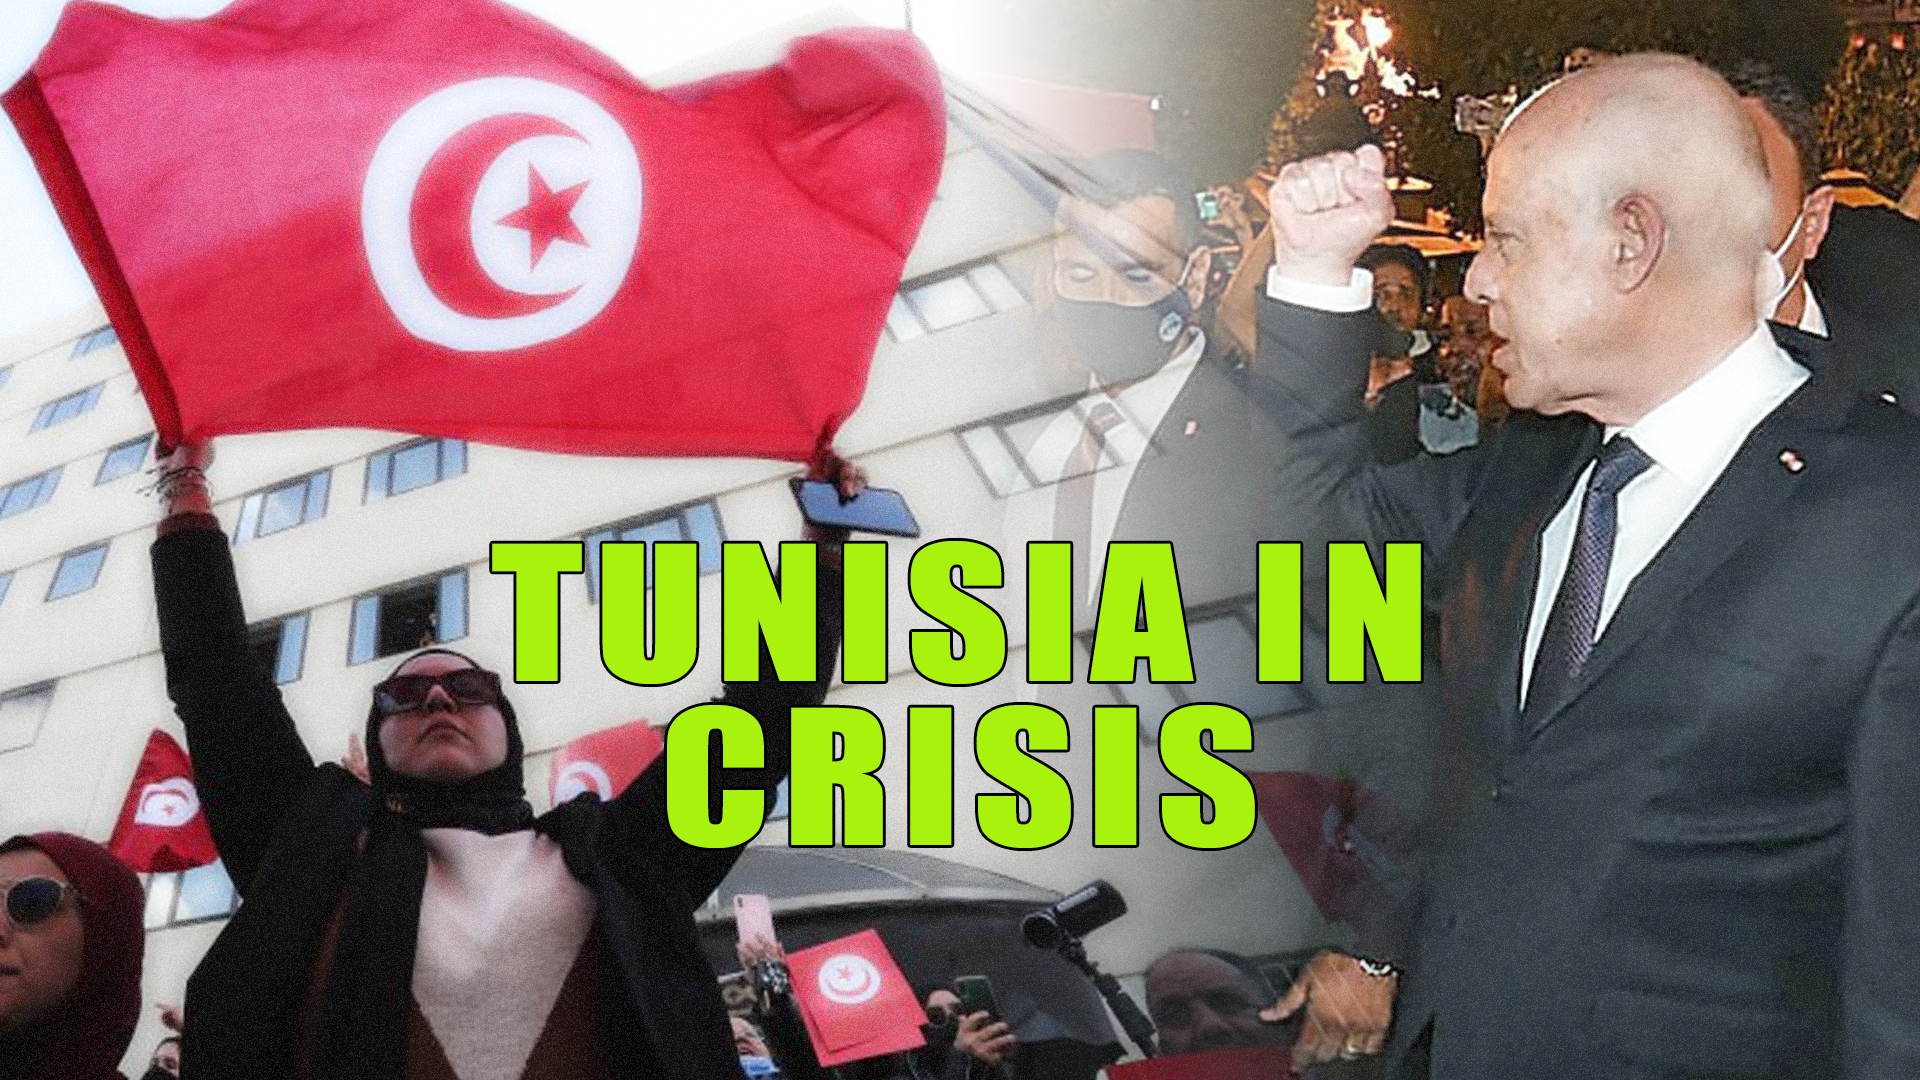 Tunisia in crisis